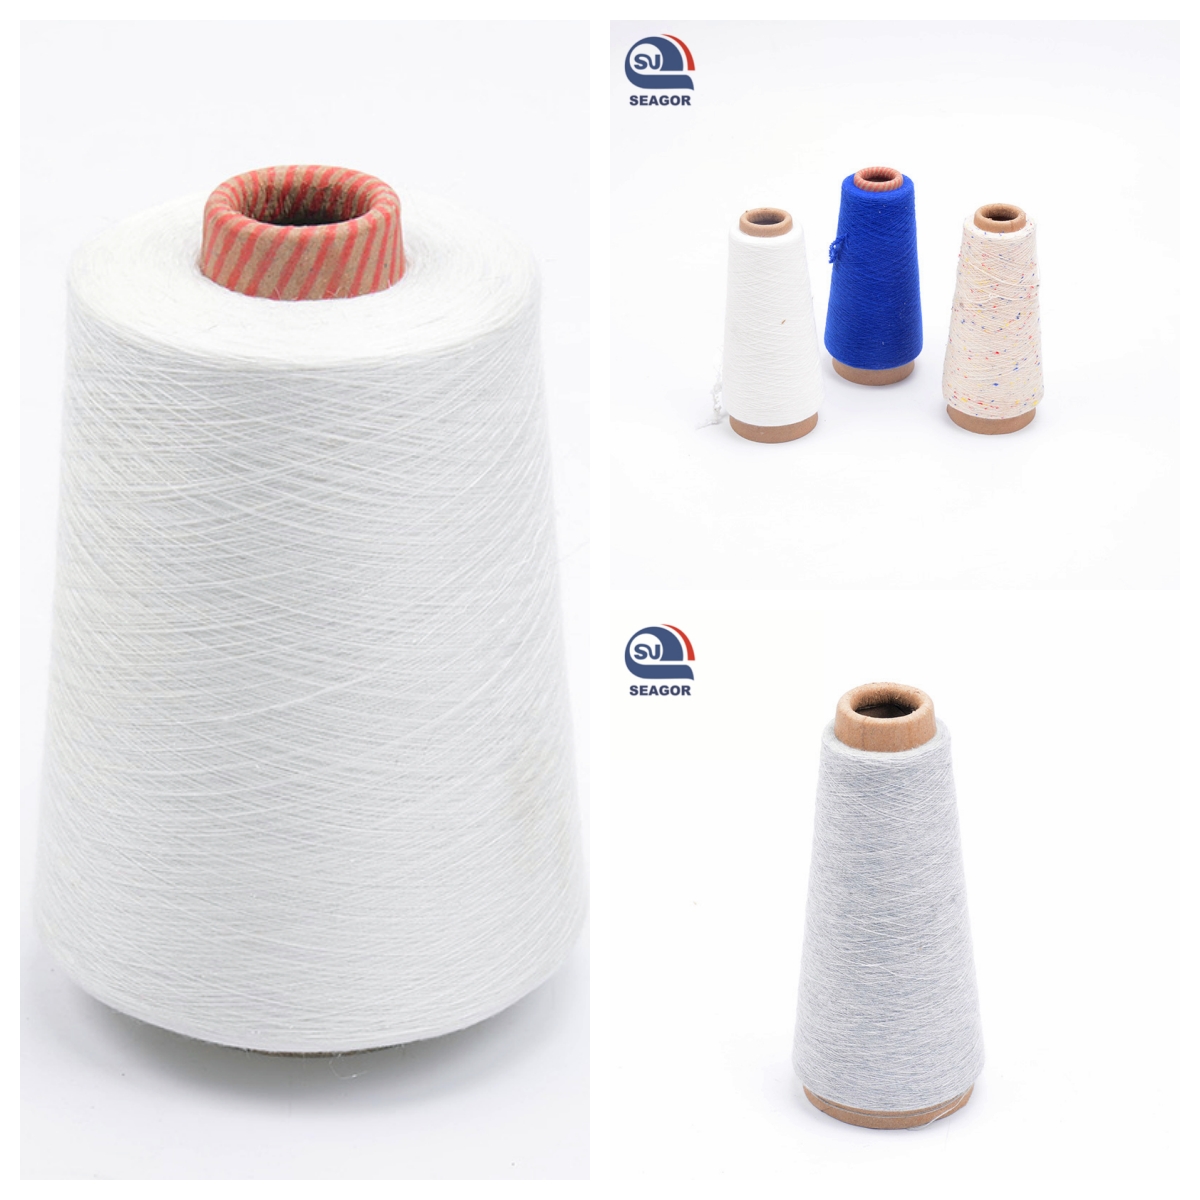 Low melting polyester yarn